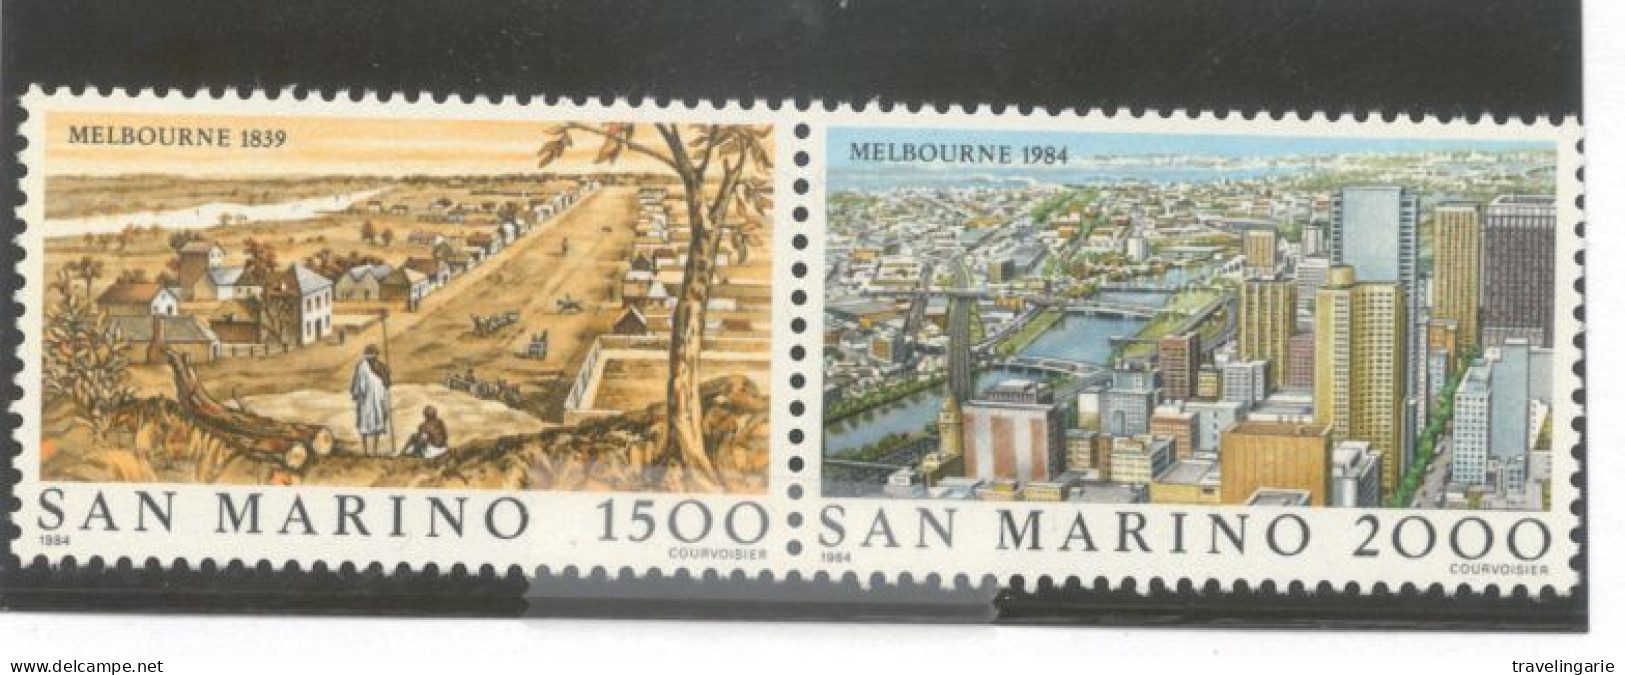 San Marino 1984 Famous Cities Melbourne MNH ** Se-tenant Pair - Nuovi